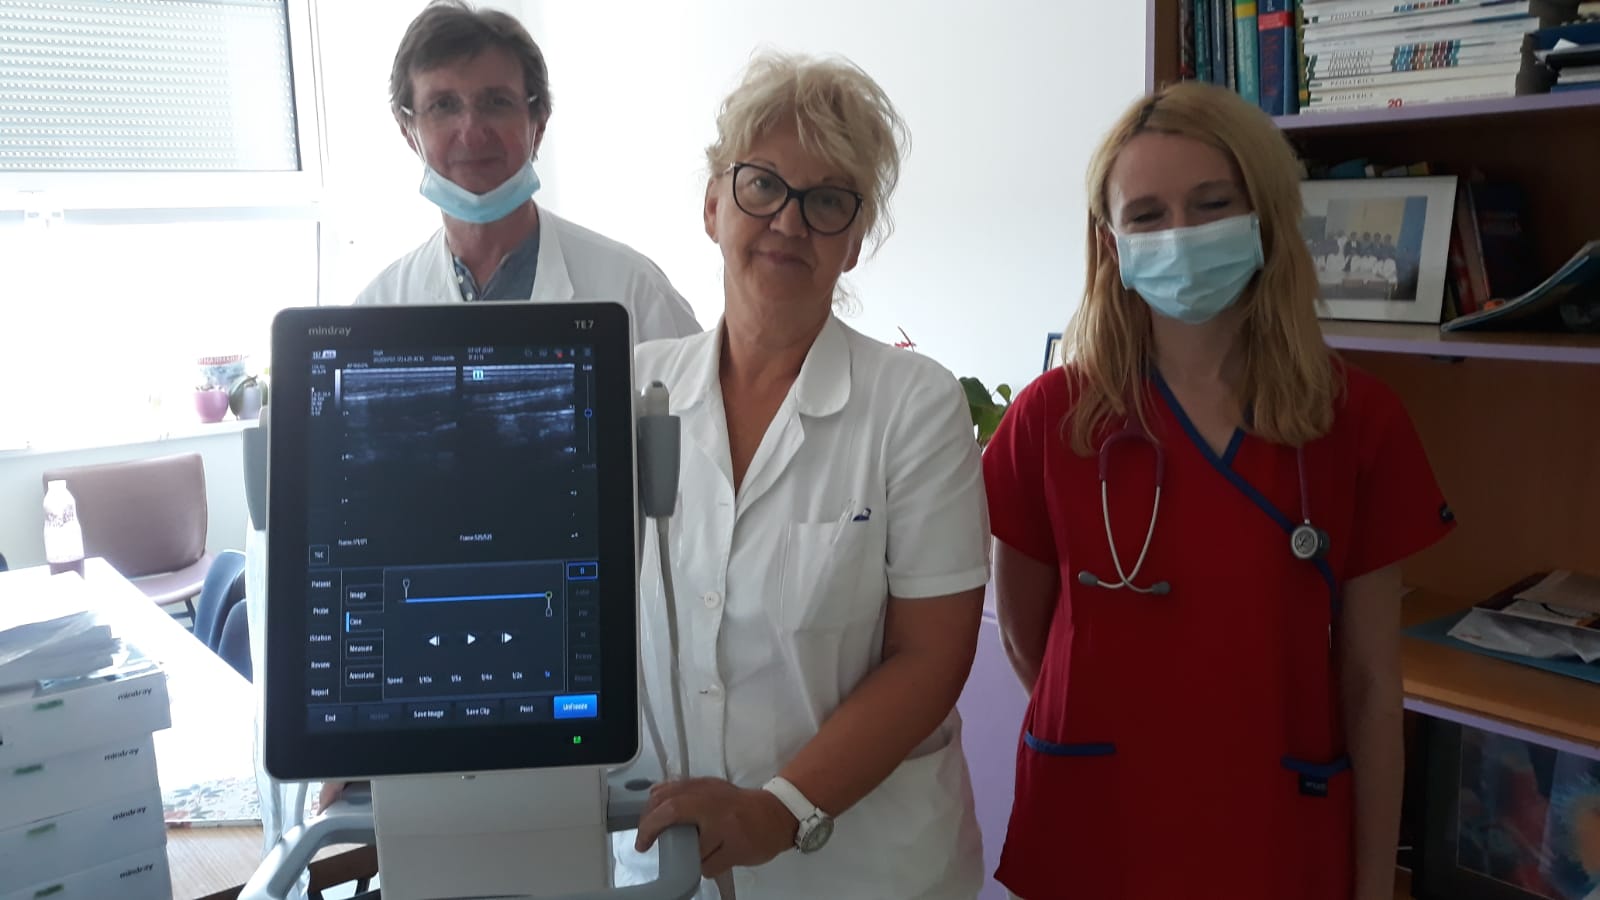 Mindray TE7 Opća bolnica Pula ultrazvuk